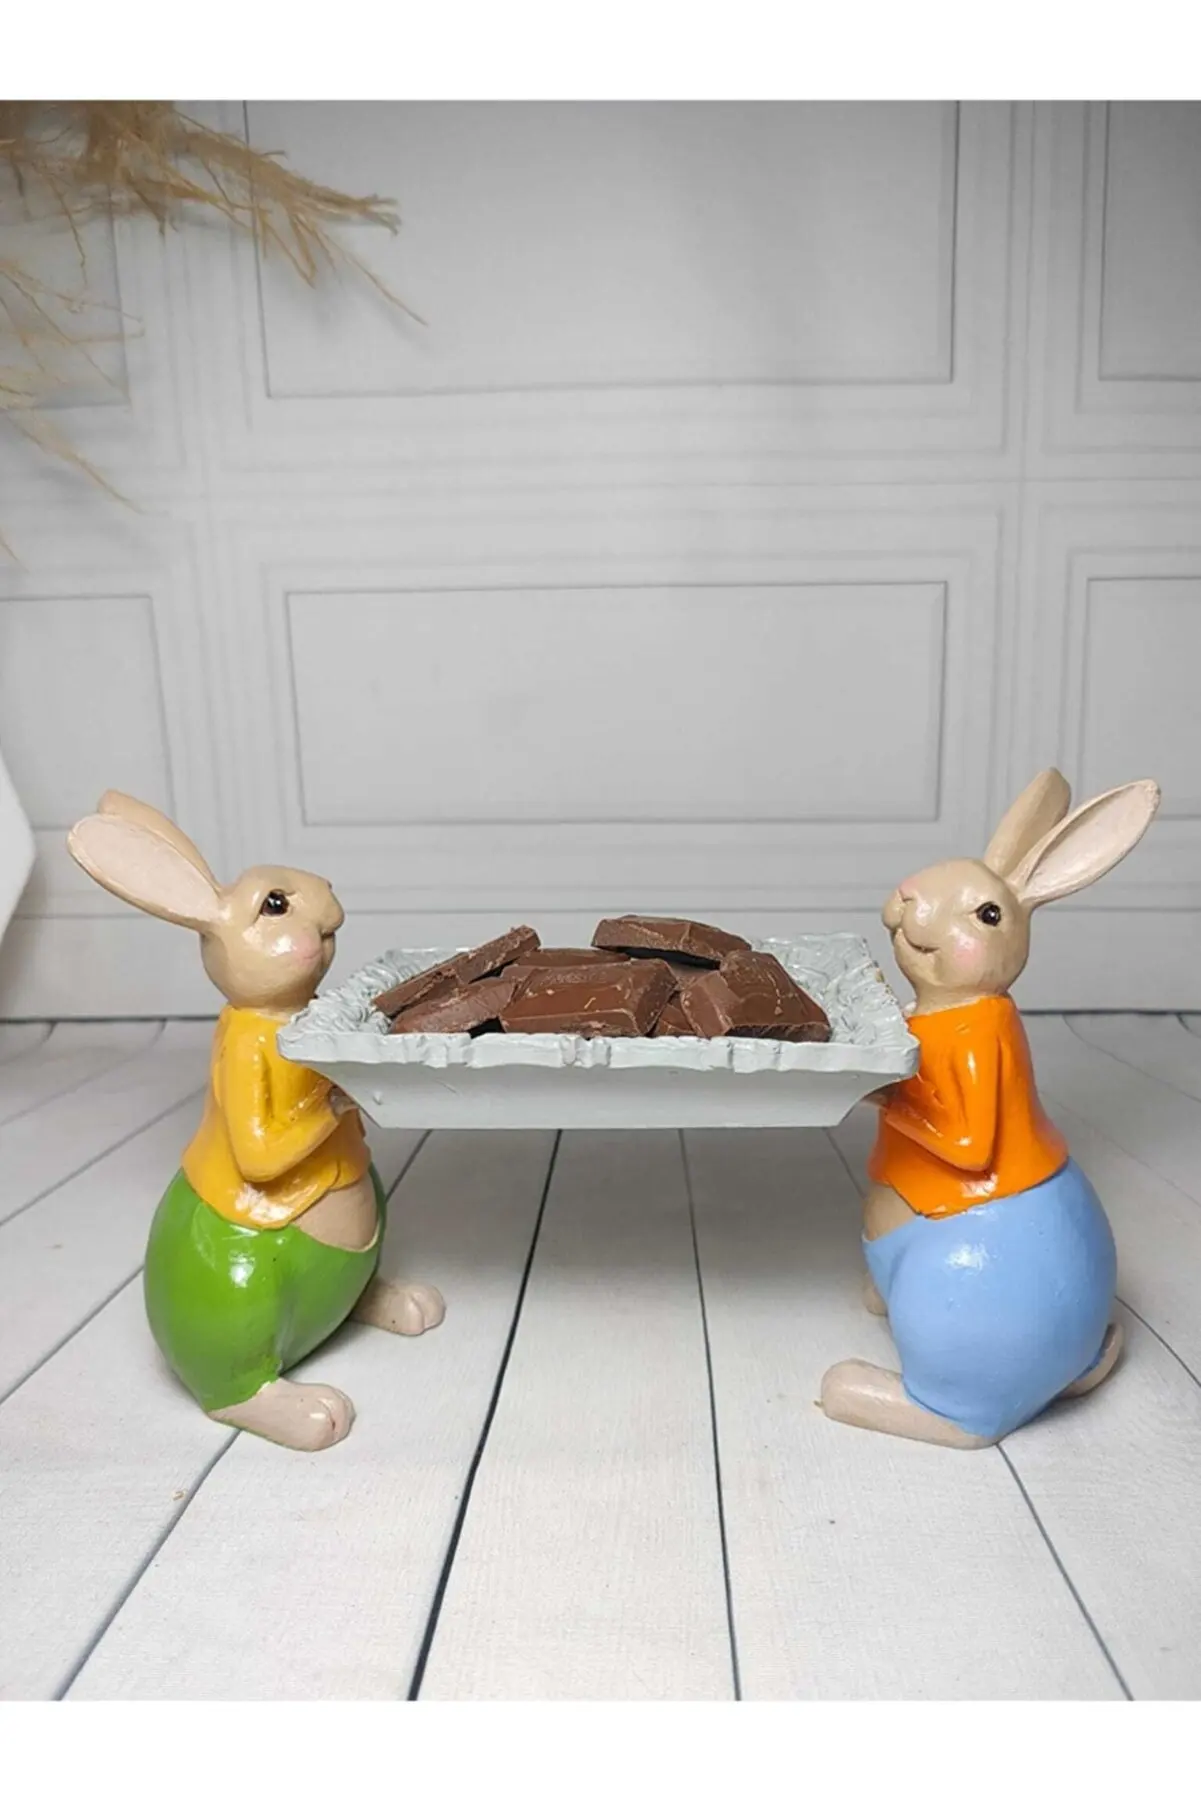 Easter Bunny Delight Holder Candy Holder Chocolate Box Stylish Presentations Gift Item Table Top Decor Festive Presentation